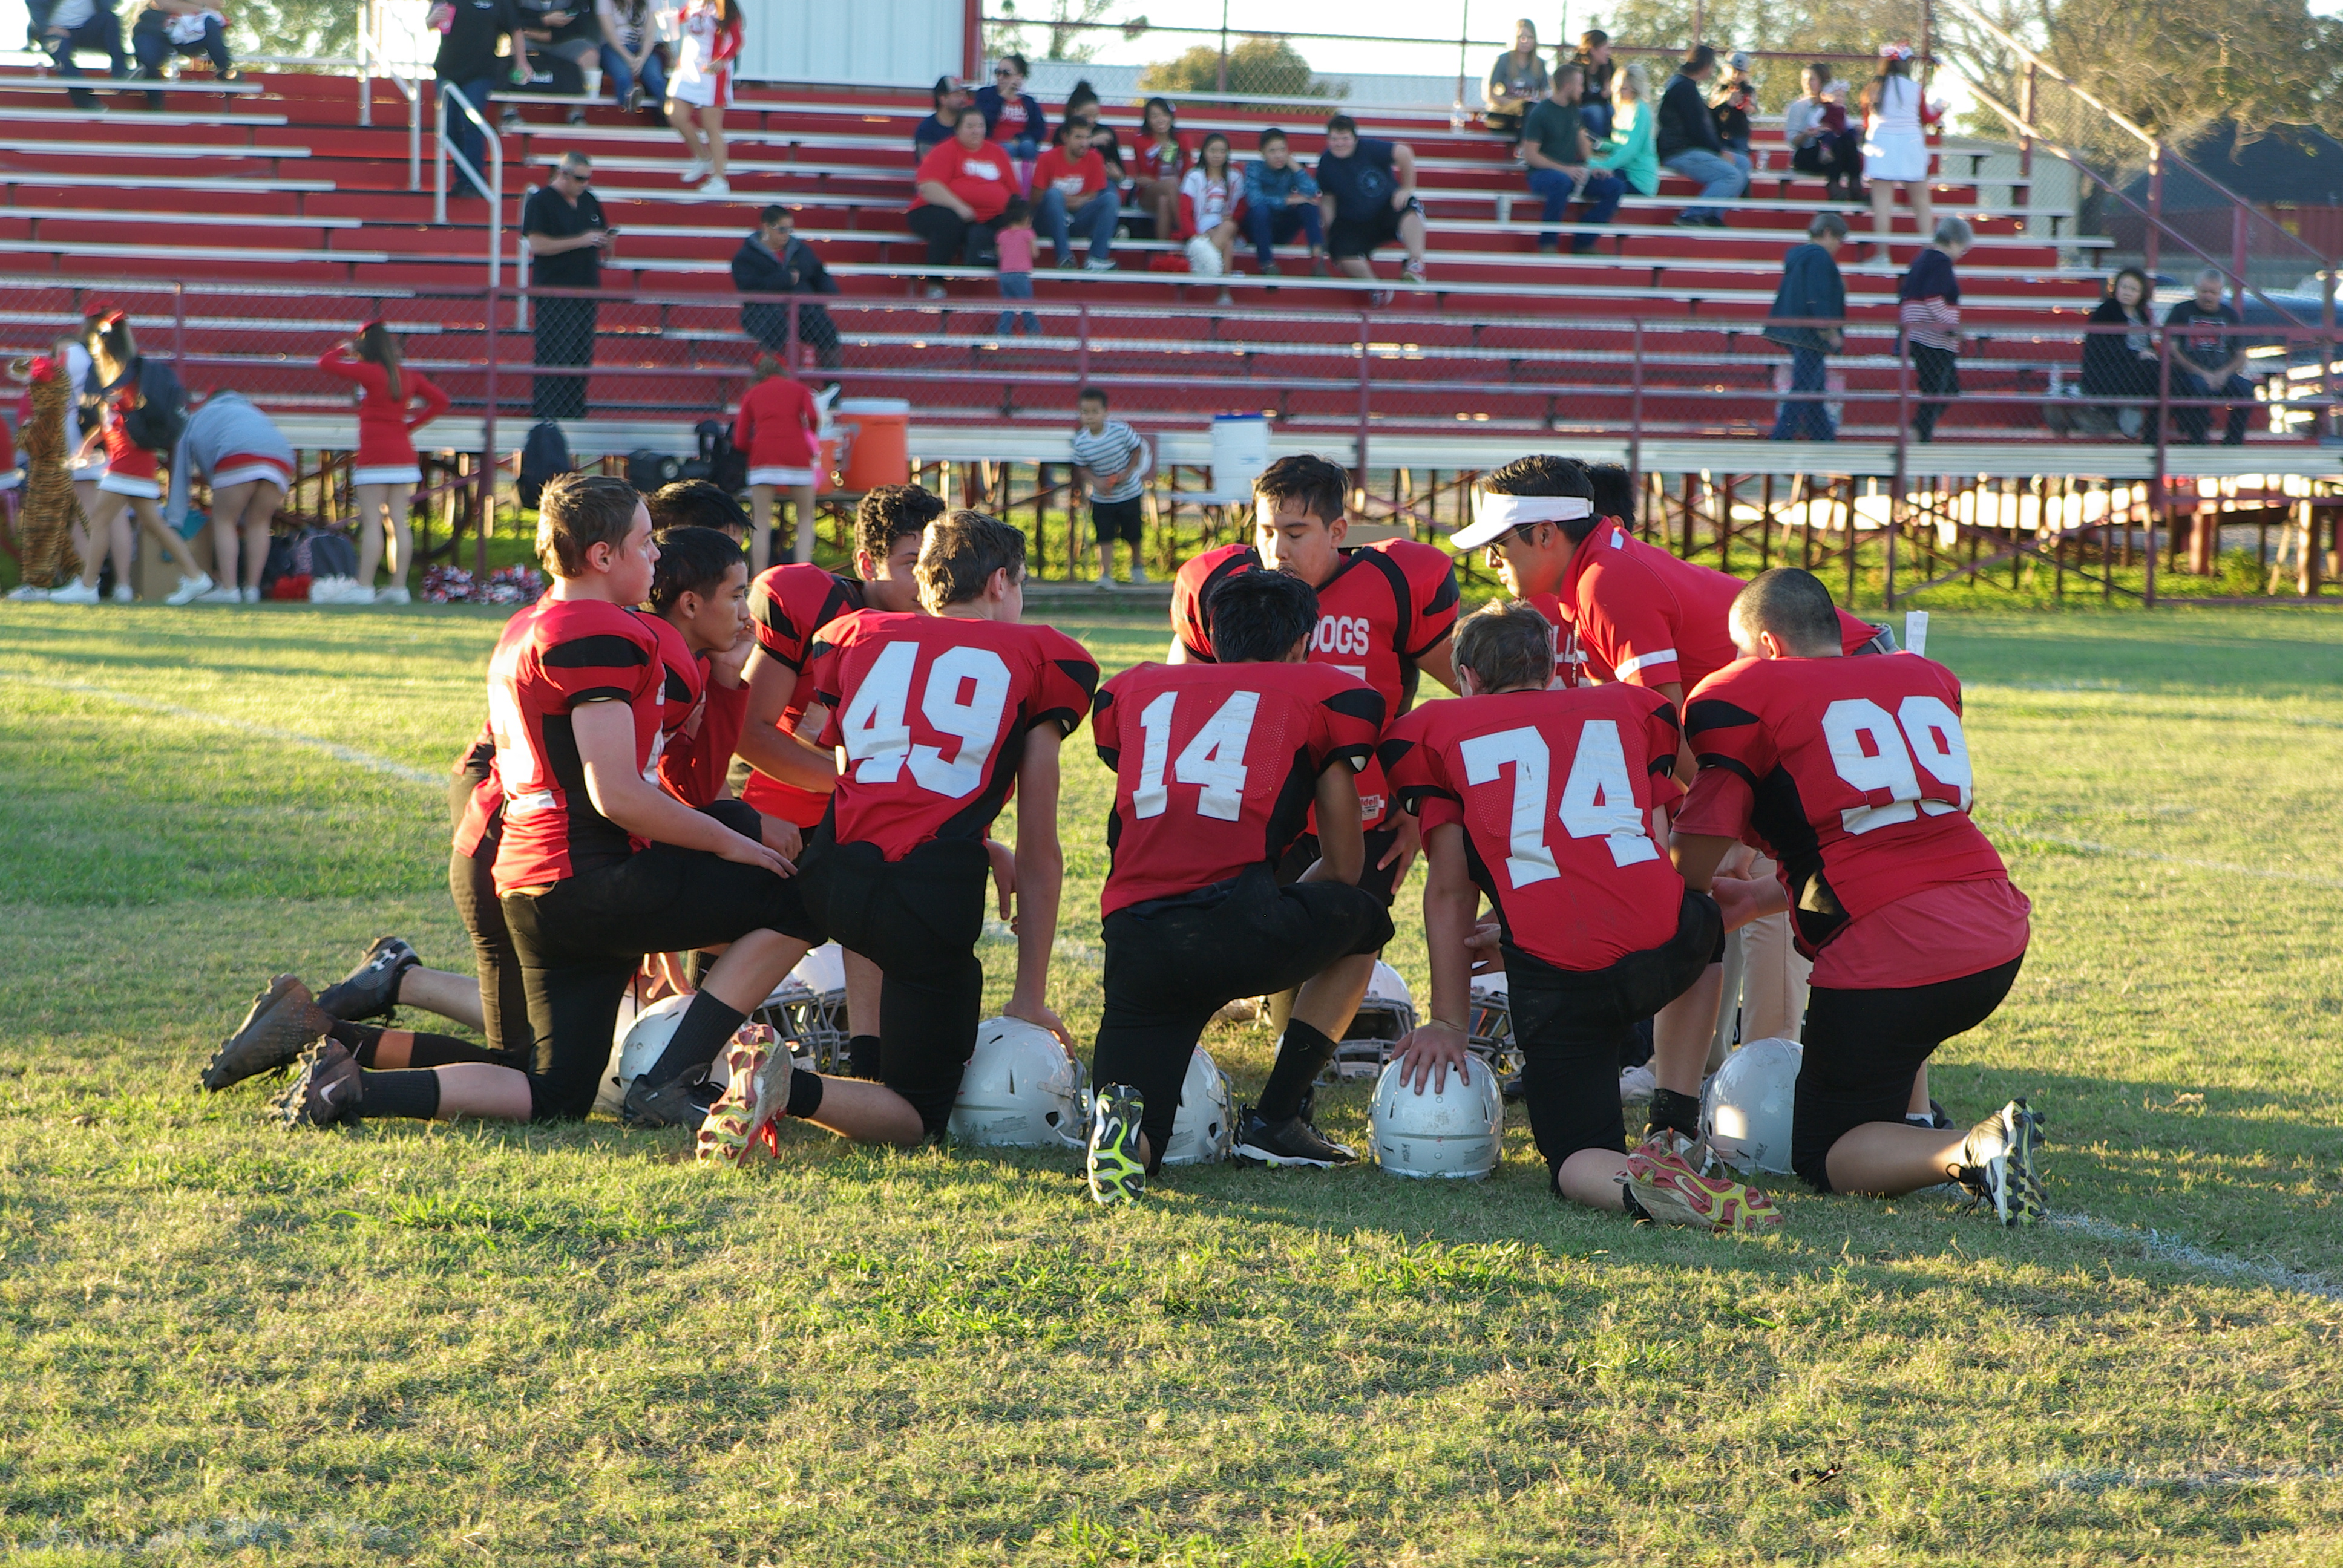 Football team kneeling for game plan